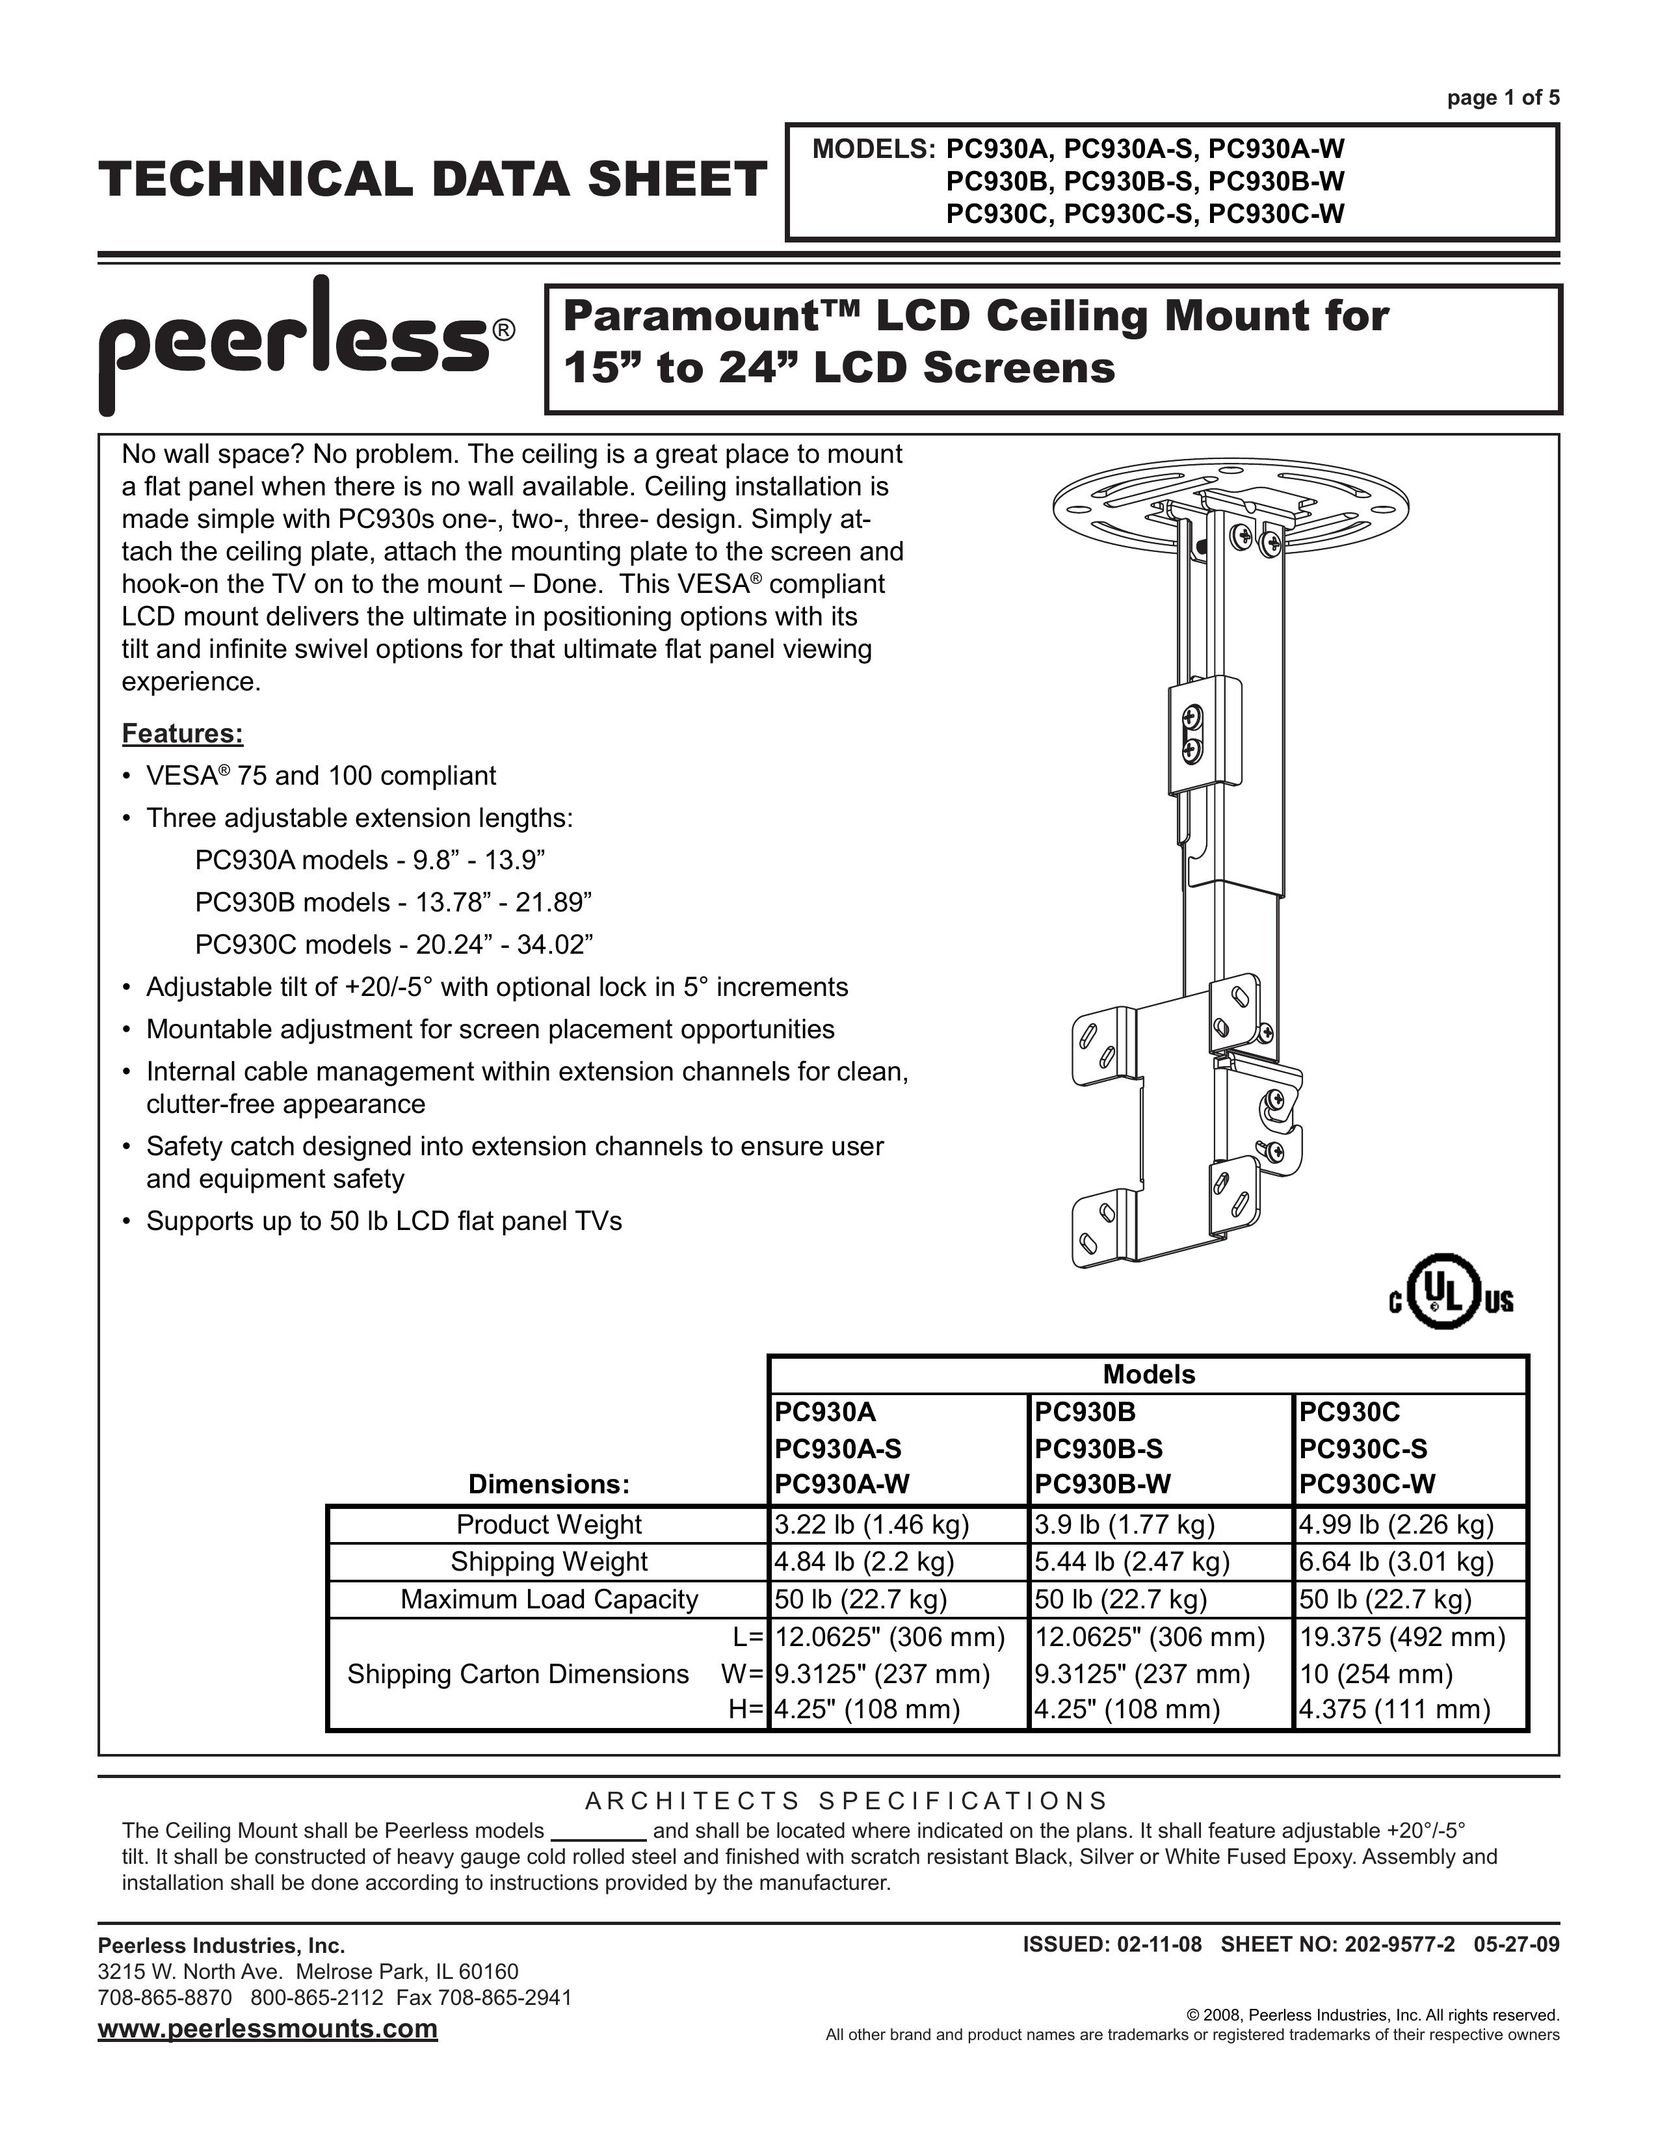 Peerless Industries PC930B-W TV Mount User Manual